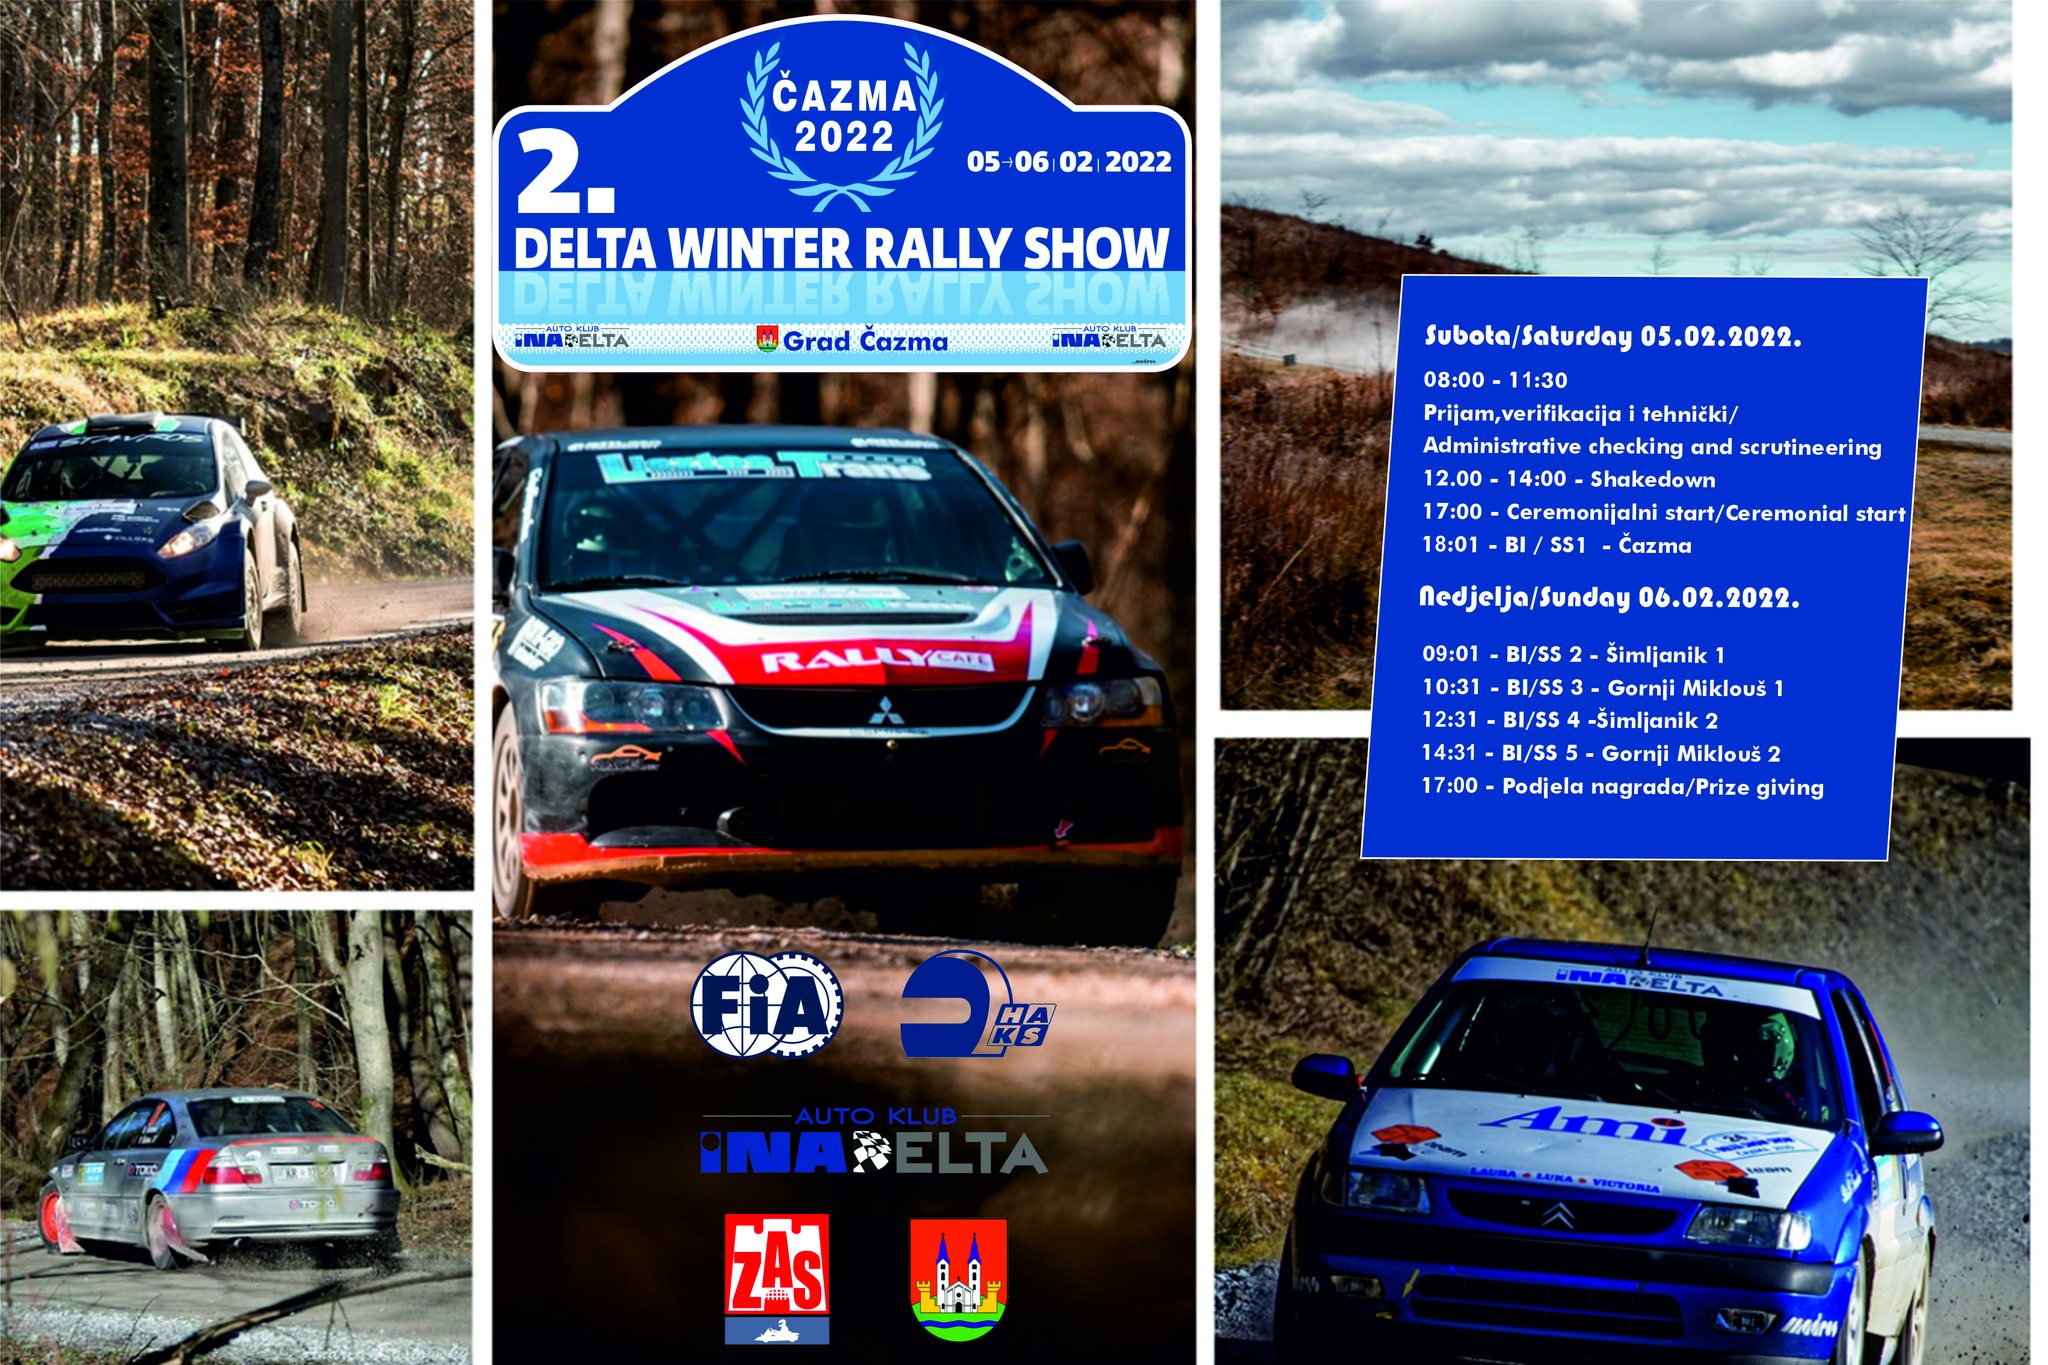 2. Delta winter rally show